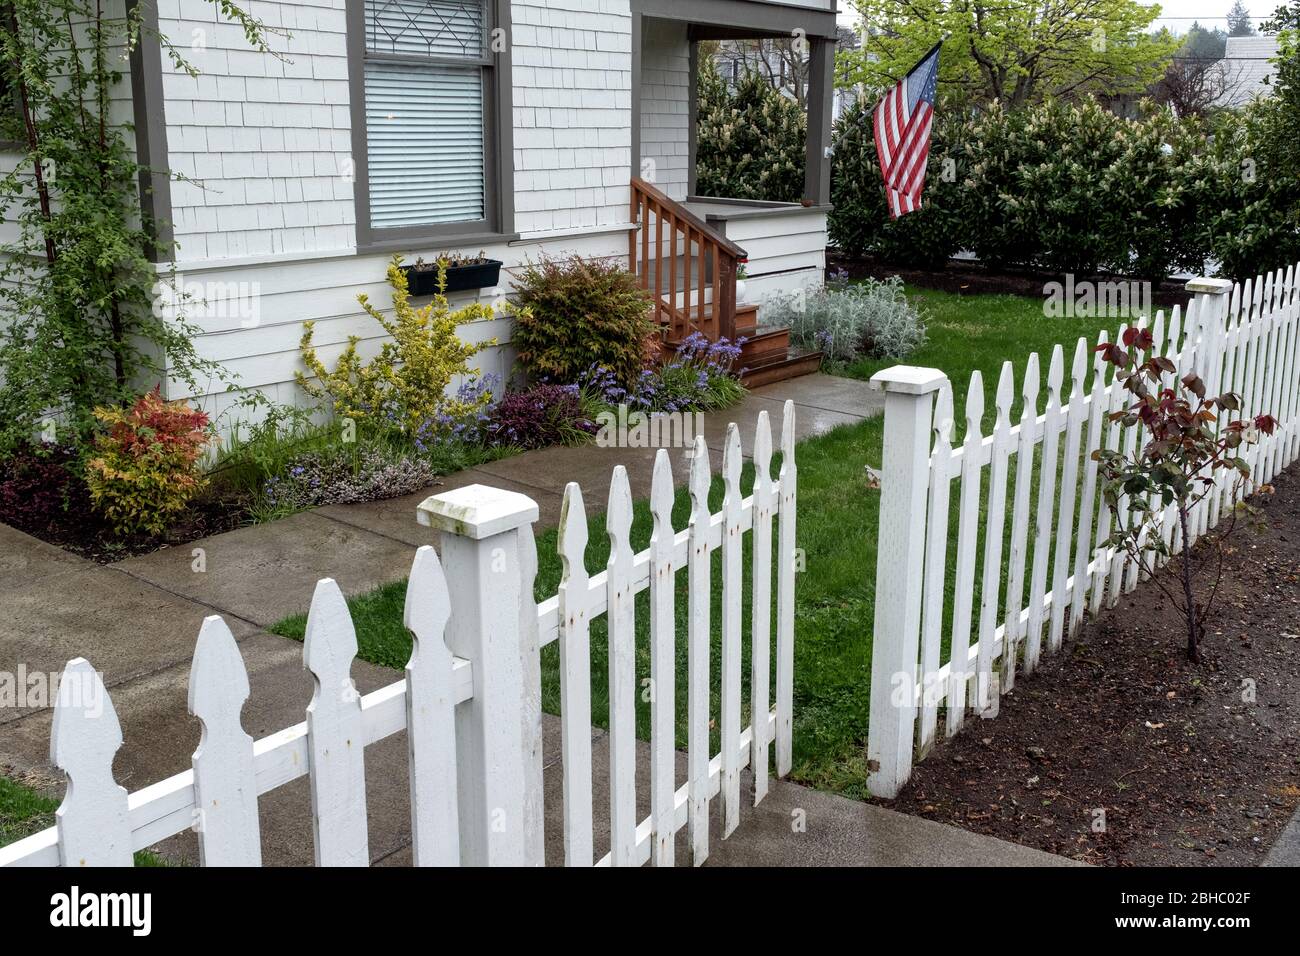 WA17462-00-BW....WASHINGTON - House with picket fence and American flag. Stock Photo